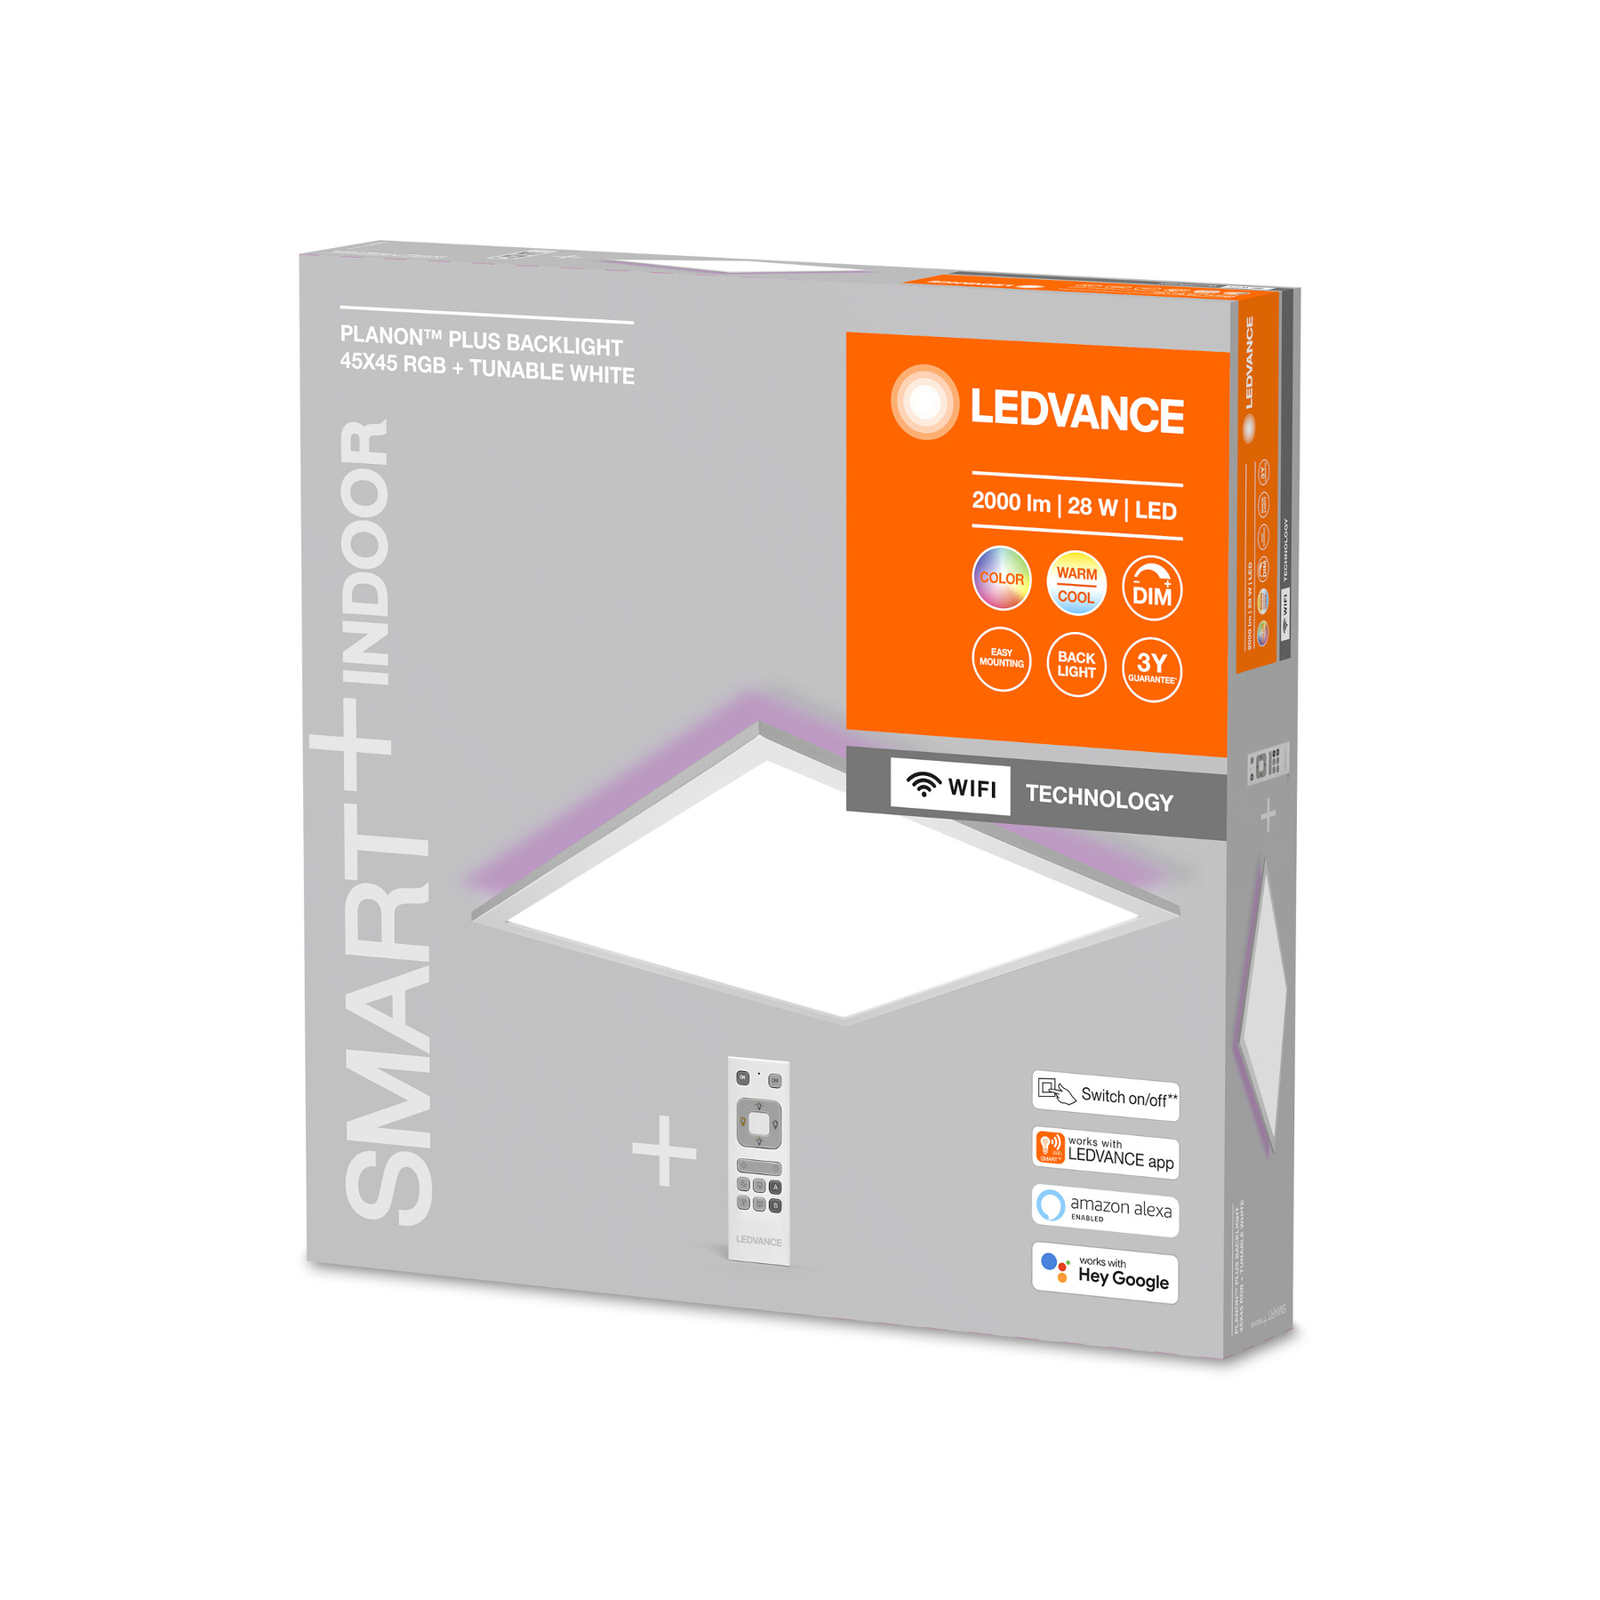 LEDVANCE SMART+ WiFi Planon Plus 45x45cm weiß